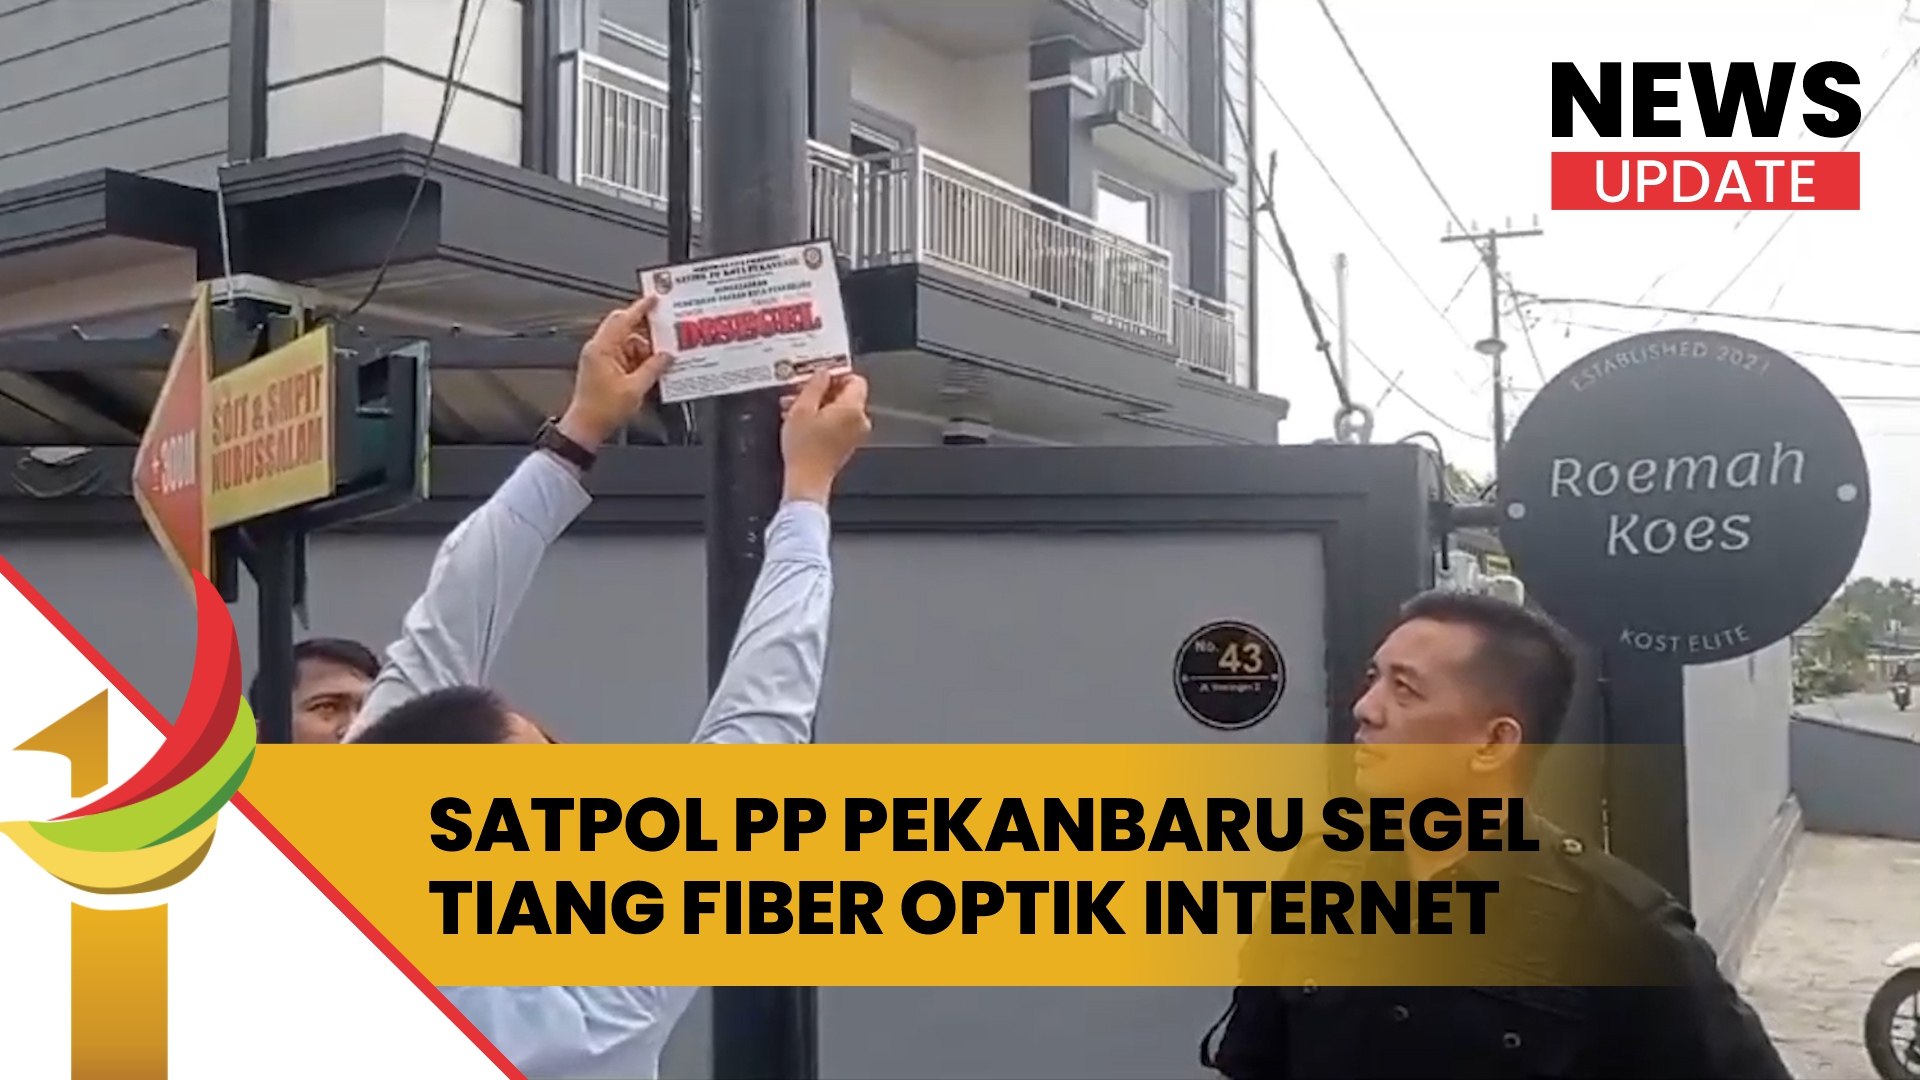 Satpol PP Pekanbaru Segel Tiang Fiber Optik Internet Semrawut - Video  Dailymotion